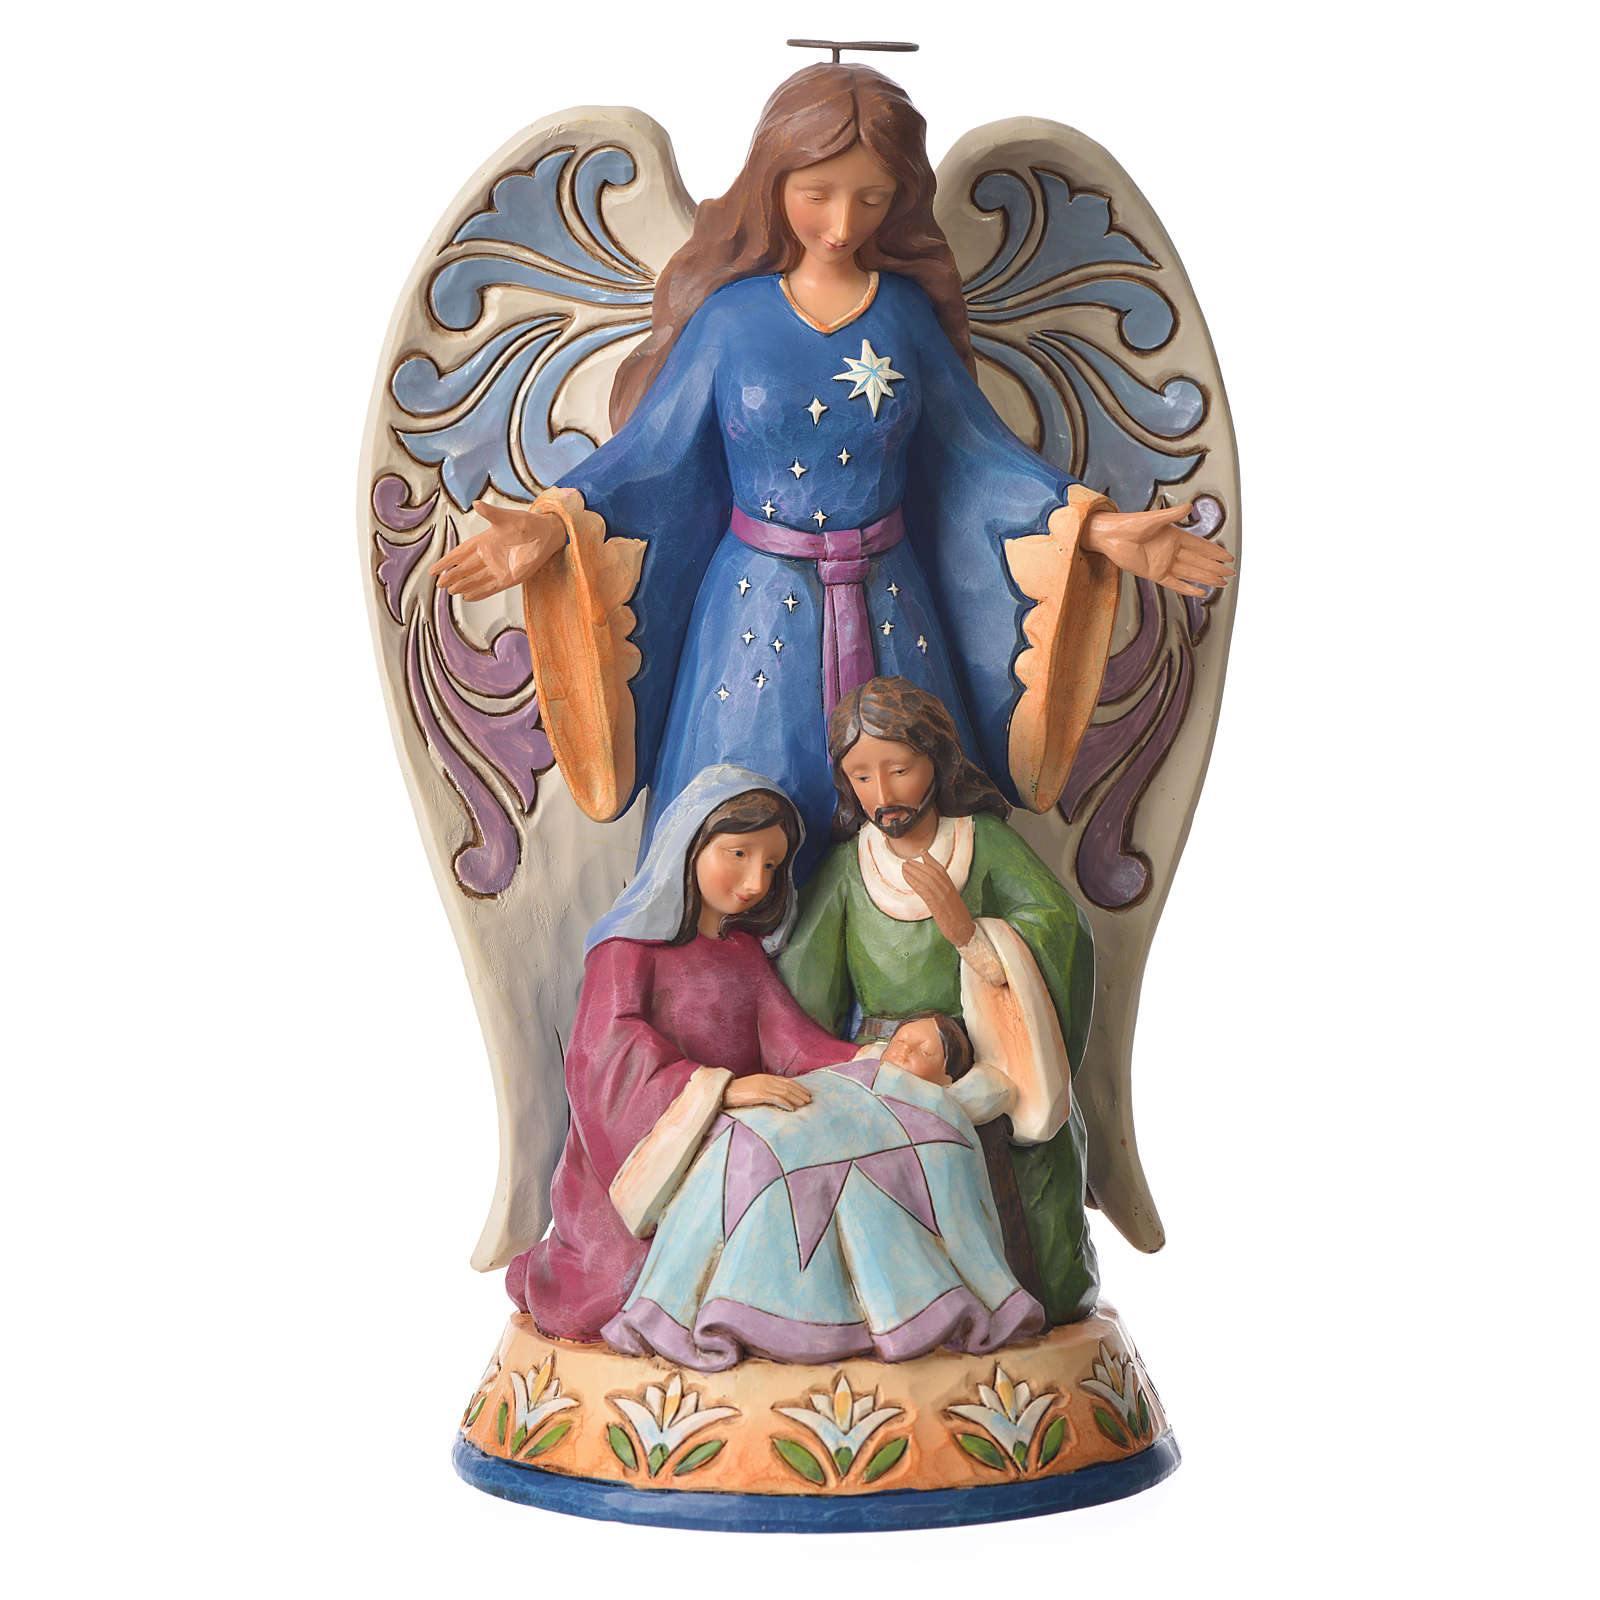 Addobbi Natalizi Jim Shore.Jim Shore Angel With Holy Family 23x16cm Figurine Online Sales On Holyart Com